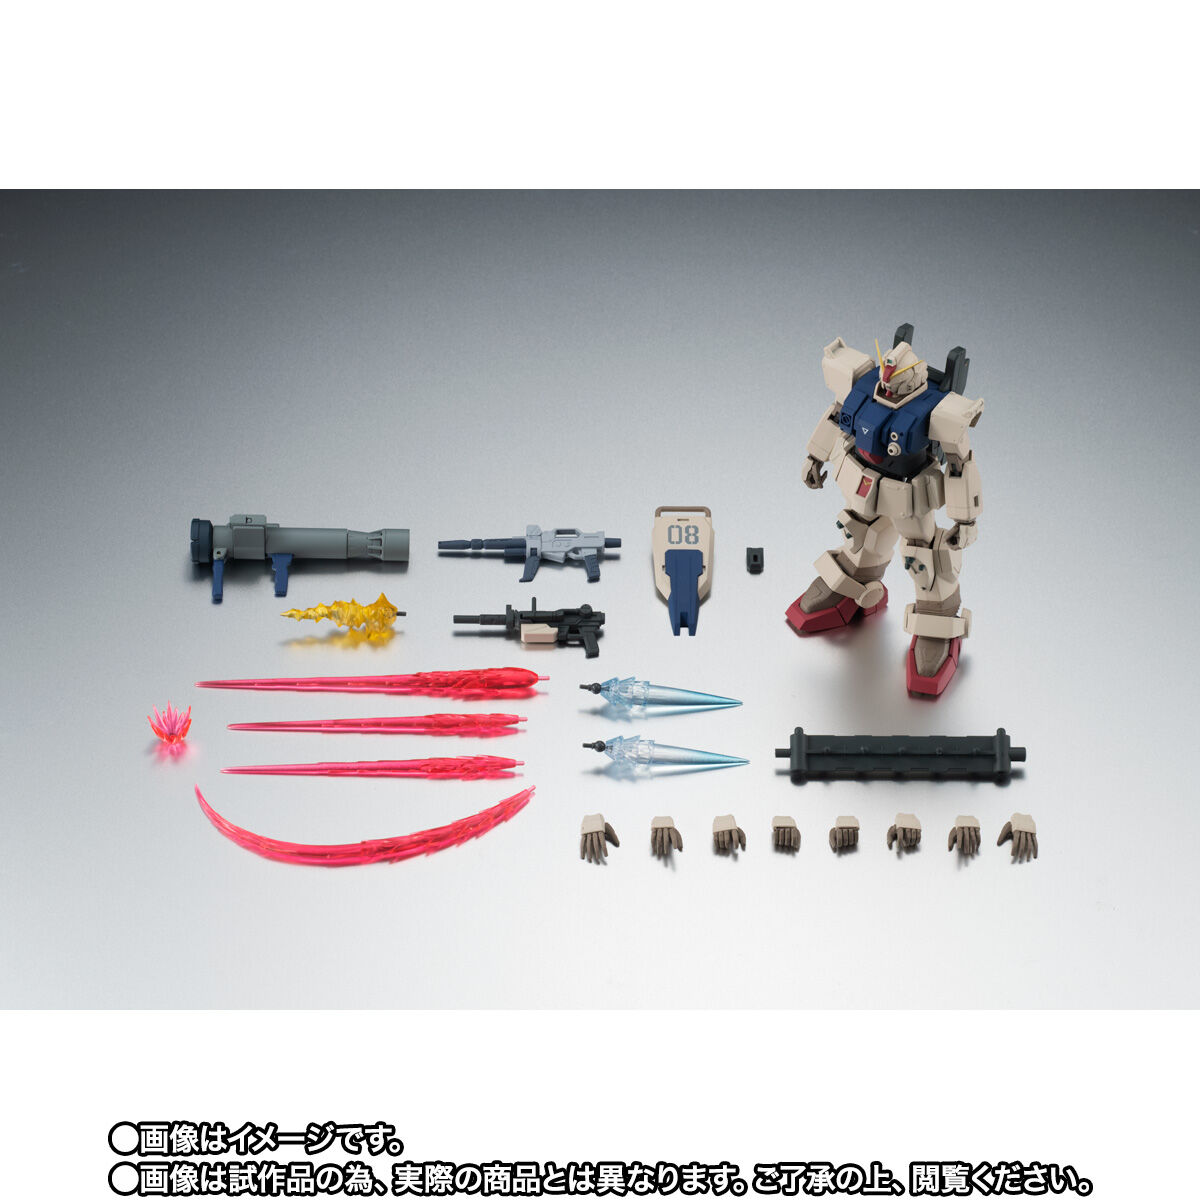 Robot Spirits(Side MS) R-SP RX-79[G] Gundam Ground Type - Type Desert ver. A.N.I.M.E.